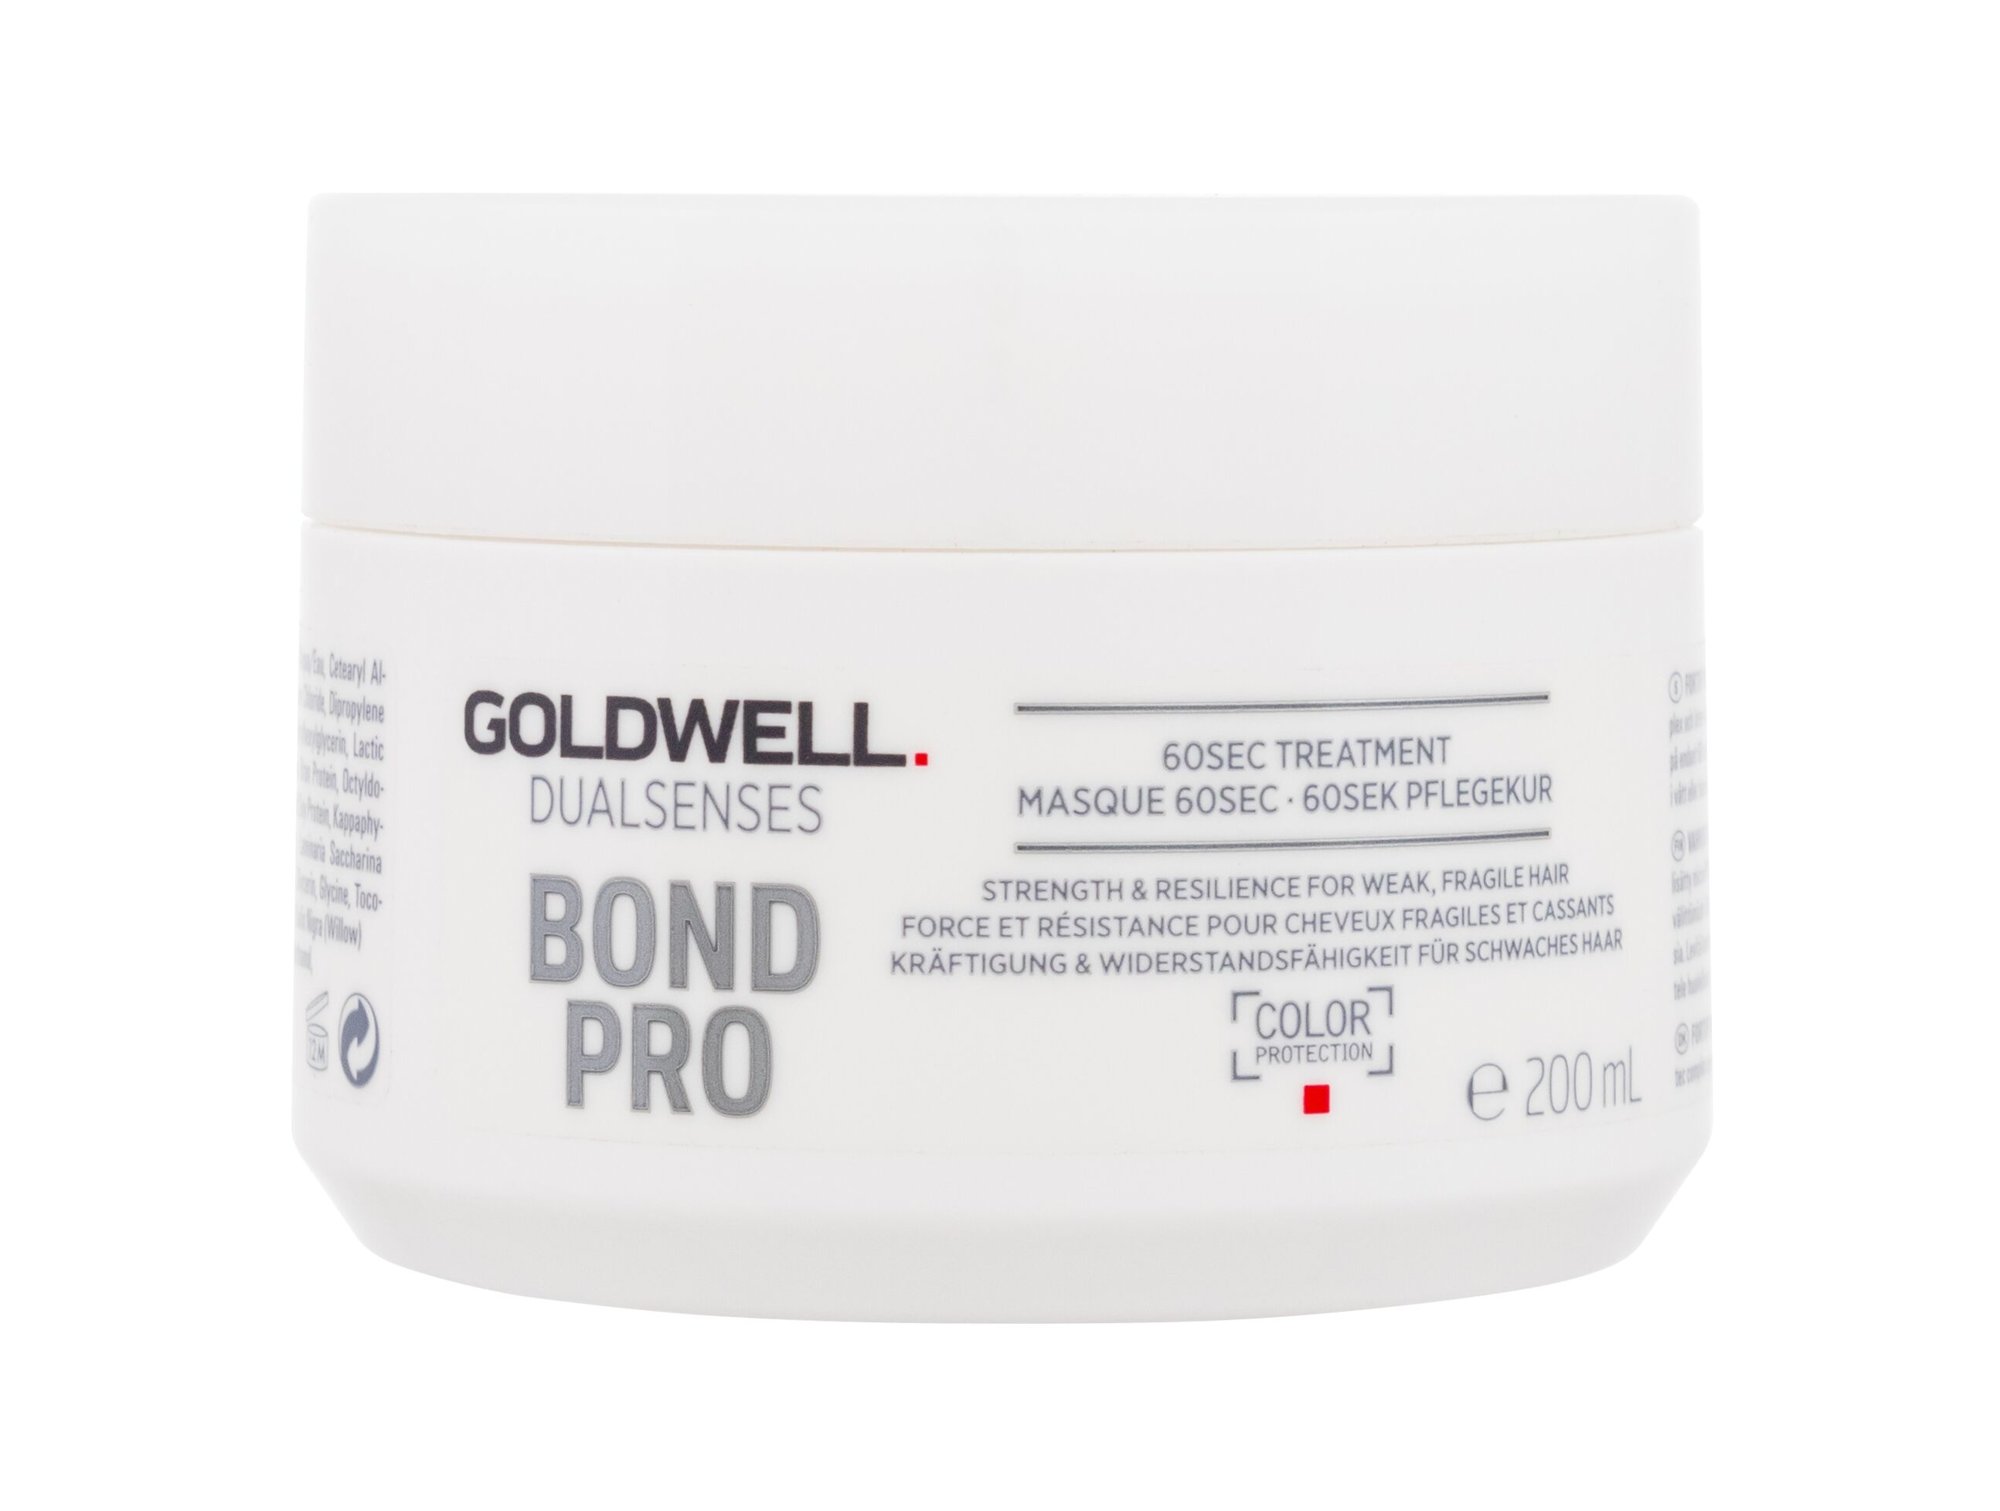 Goldwell Dualsenses Bond Pro 60Sec Treatment plaukų kaukė